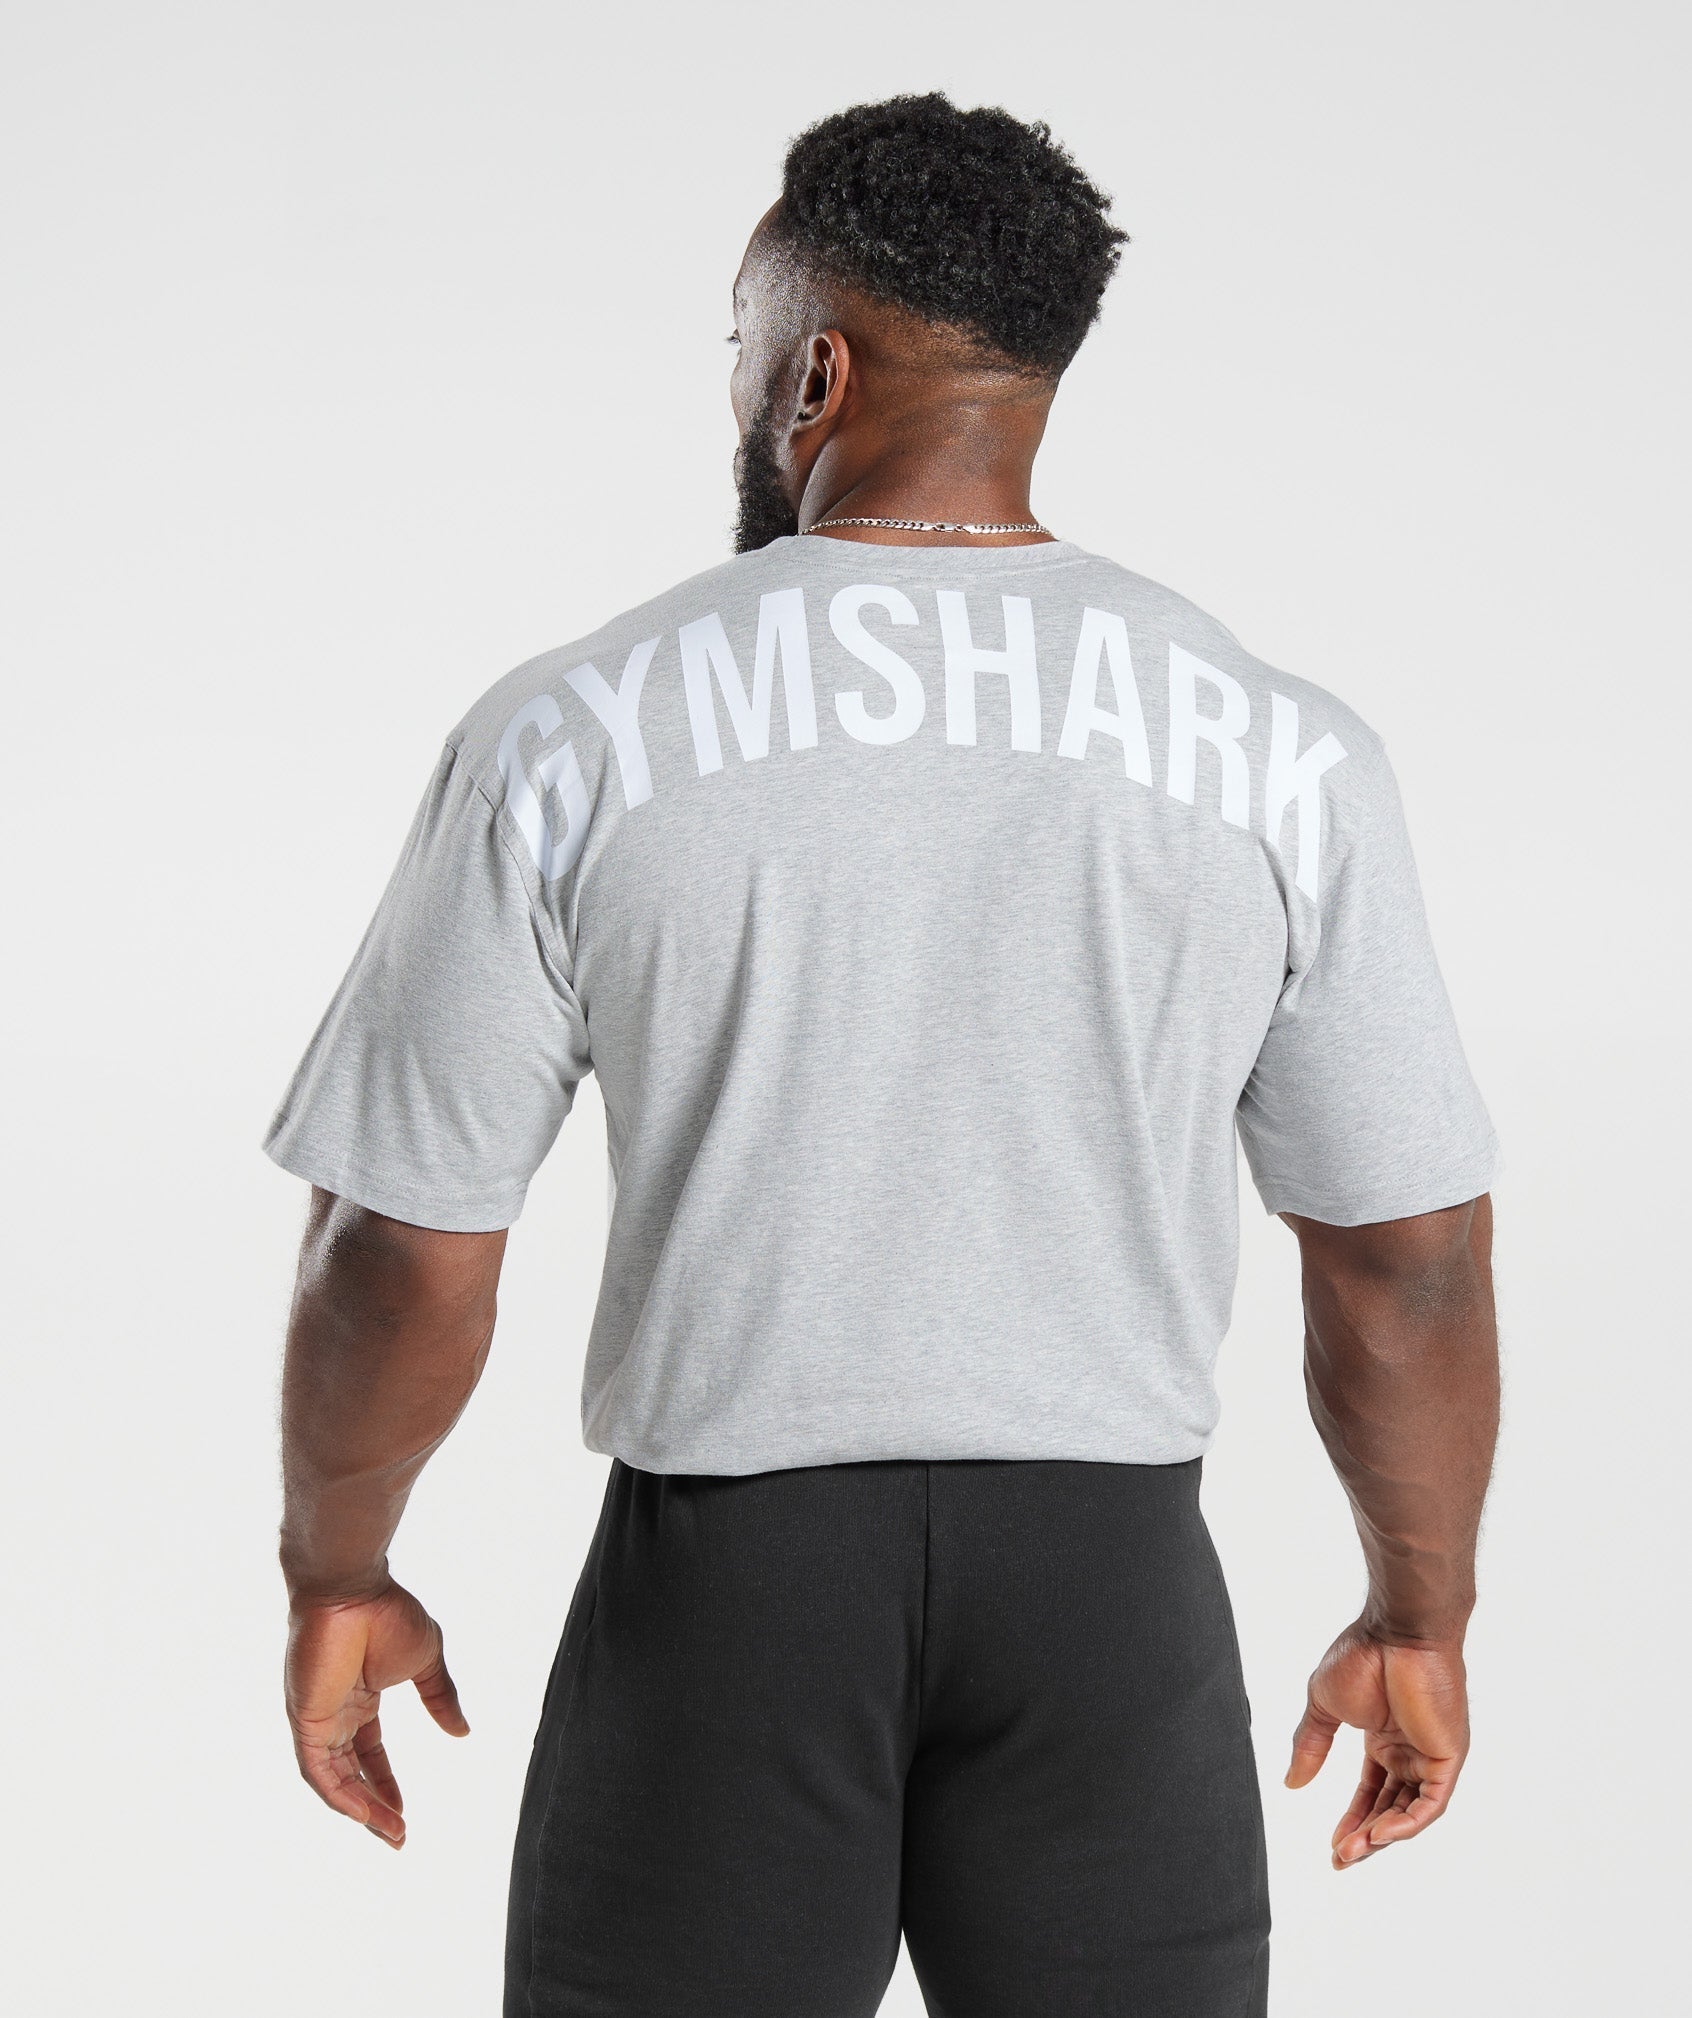 GYM SHARK SANDO Fitness Gym Shirt Muscle Shirt tshirt printed